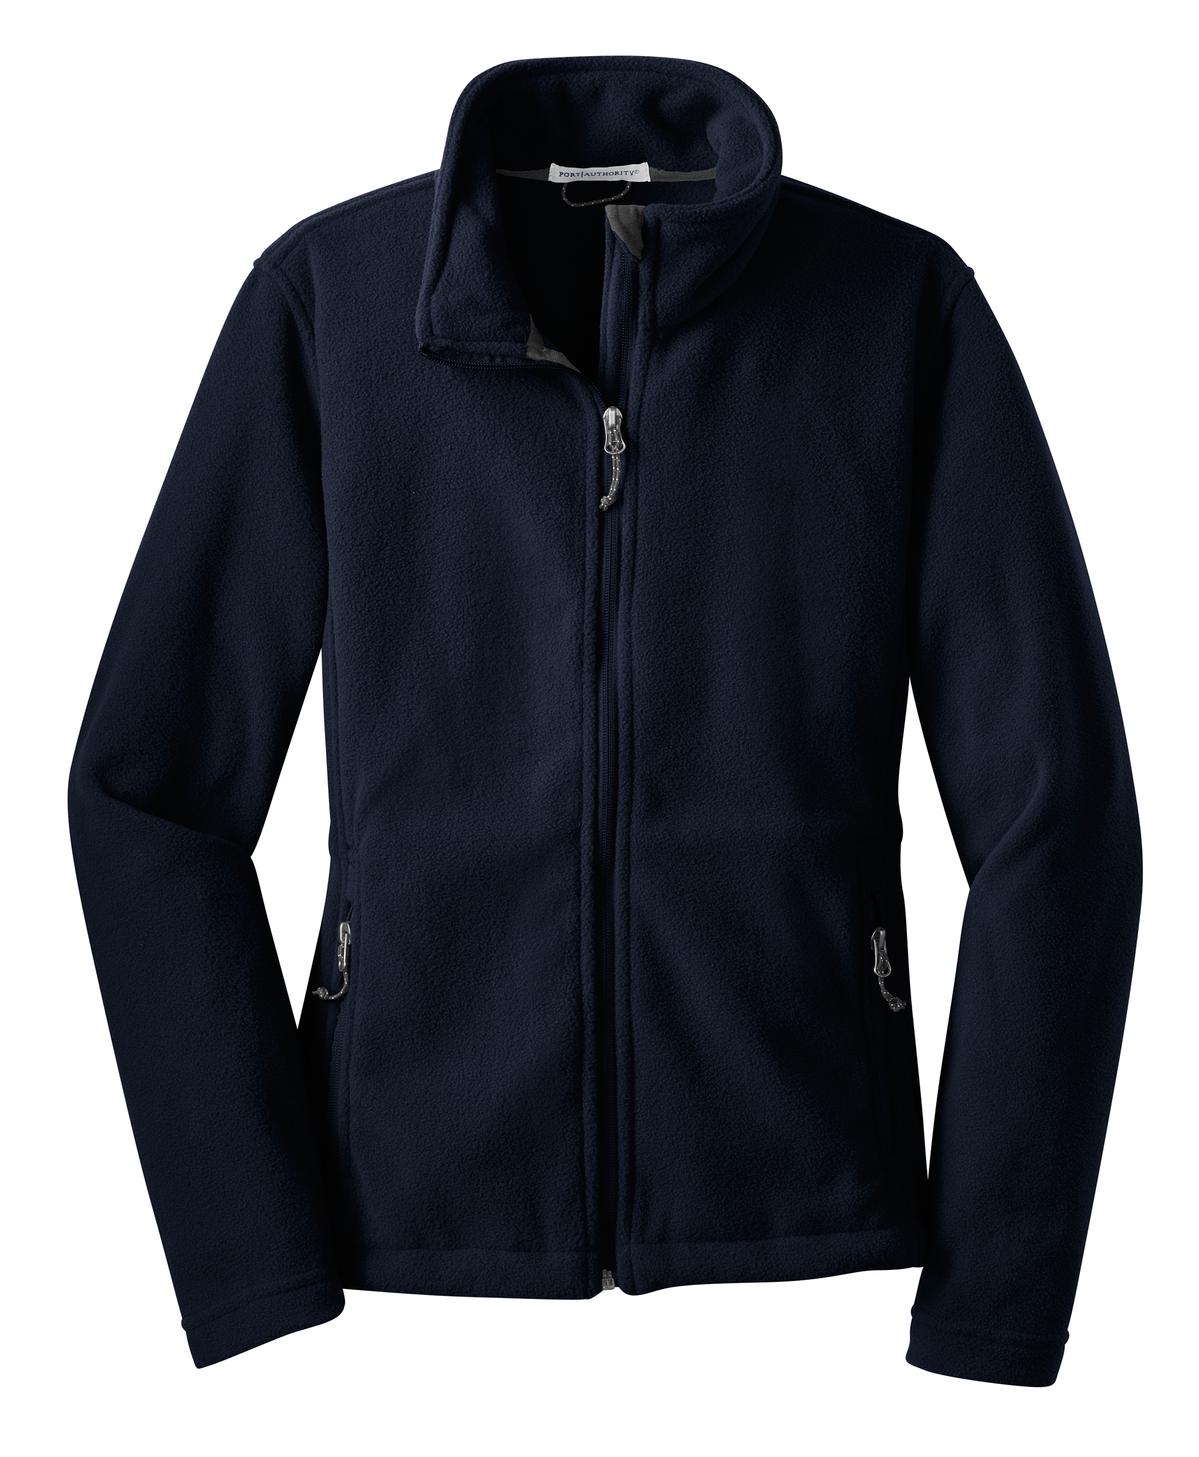 Port Authority Ladies Value Fleece Jacket. L217